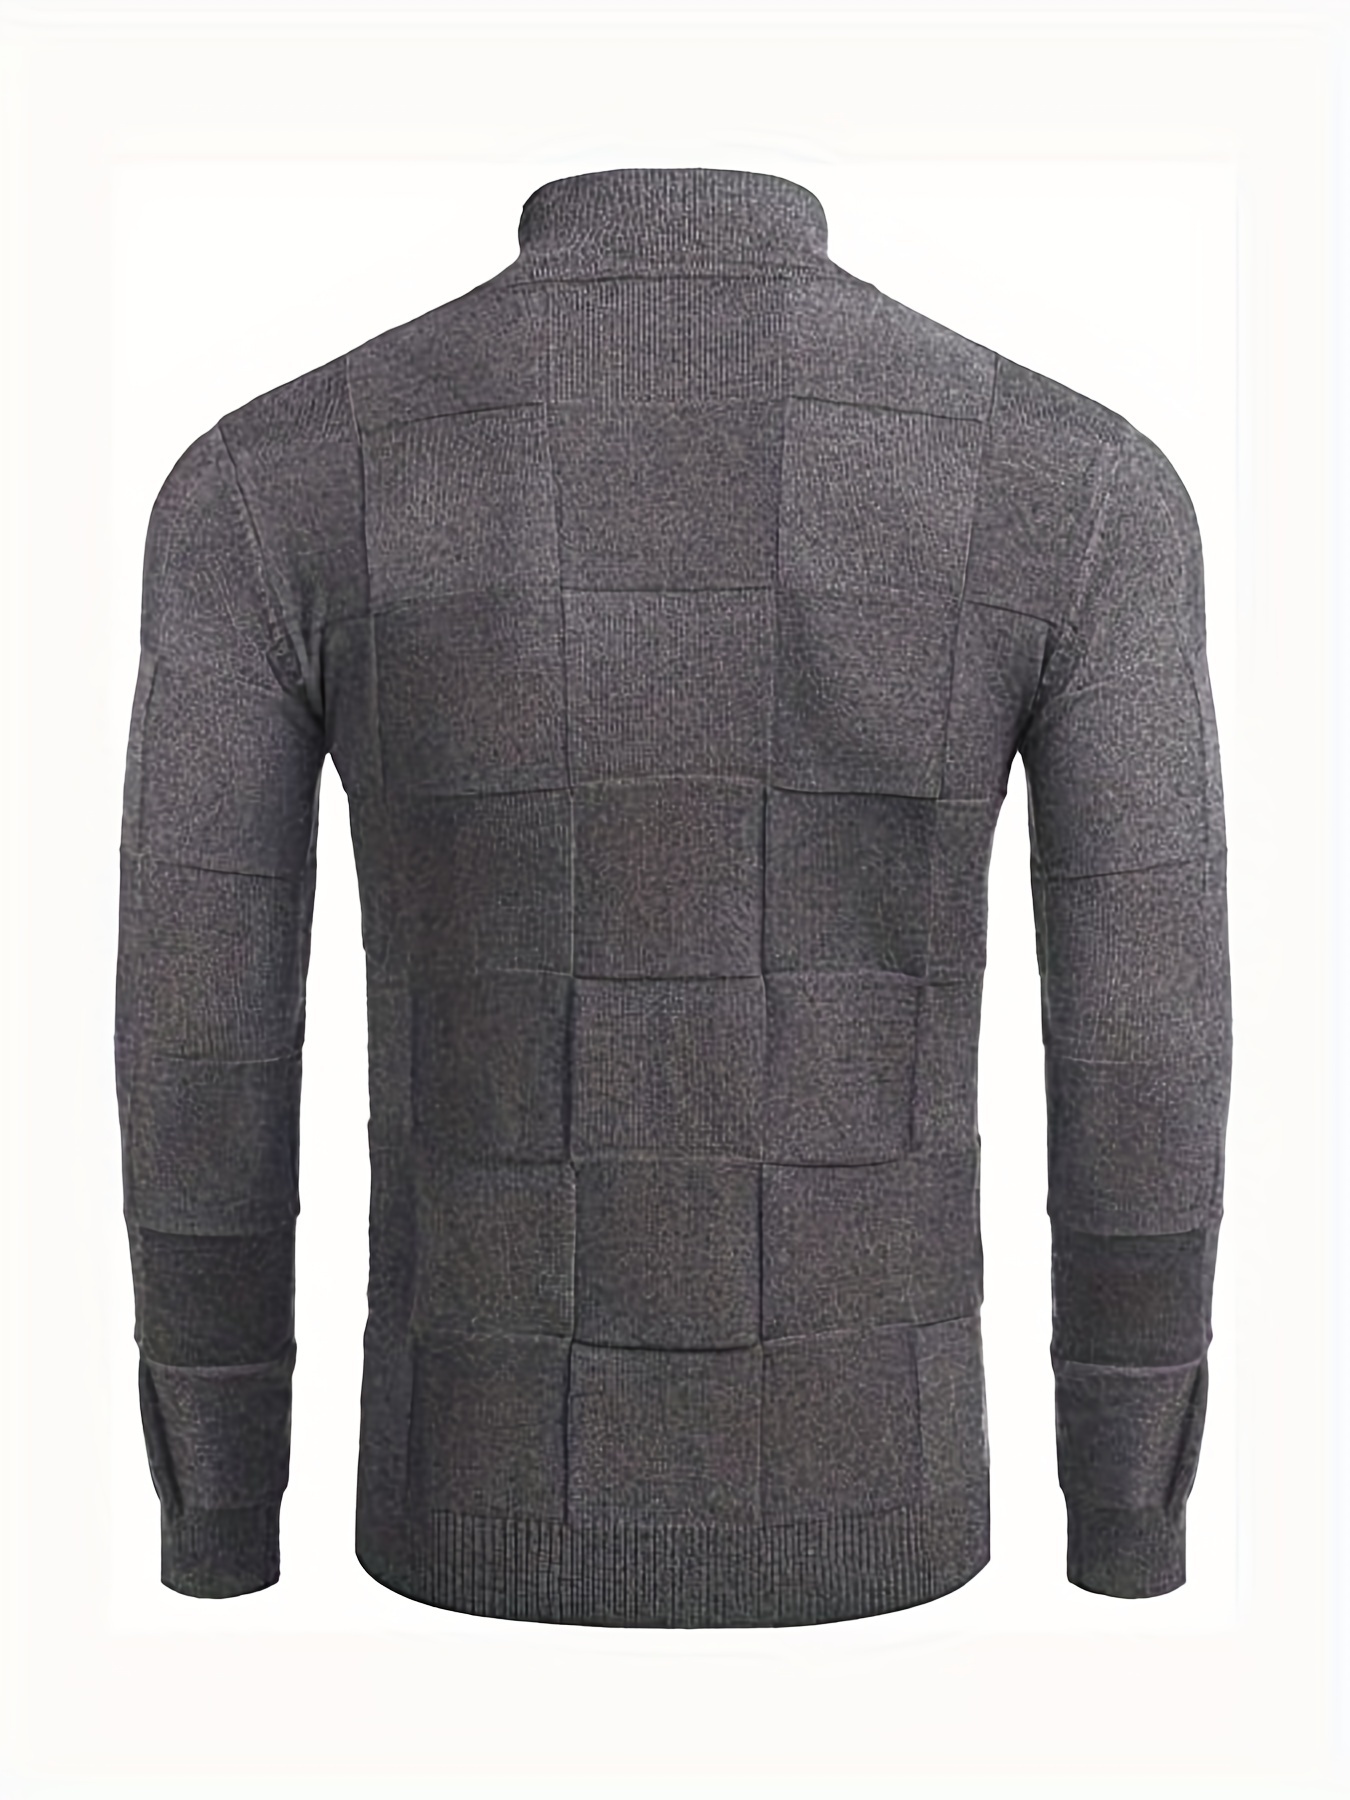 COOFANDY Men's Slim Fit Mock Turtleneck Pullover Sweater Casual